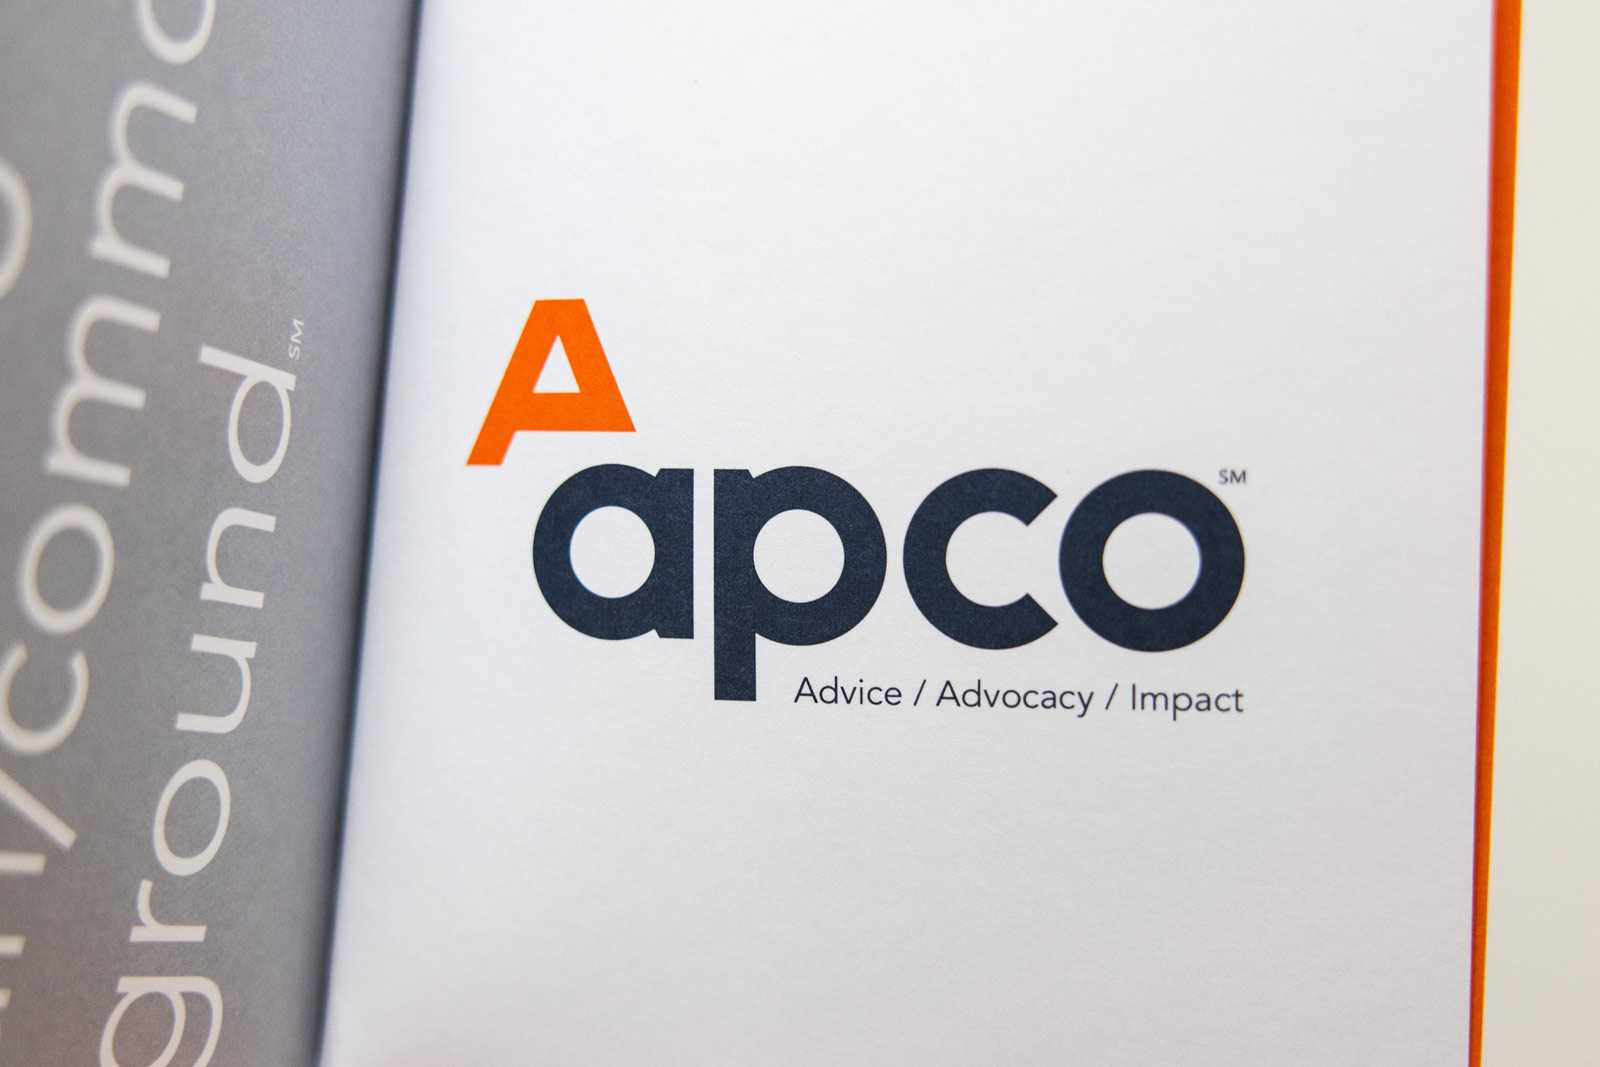 apco logo on printed piece